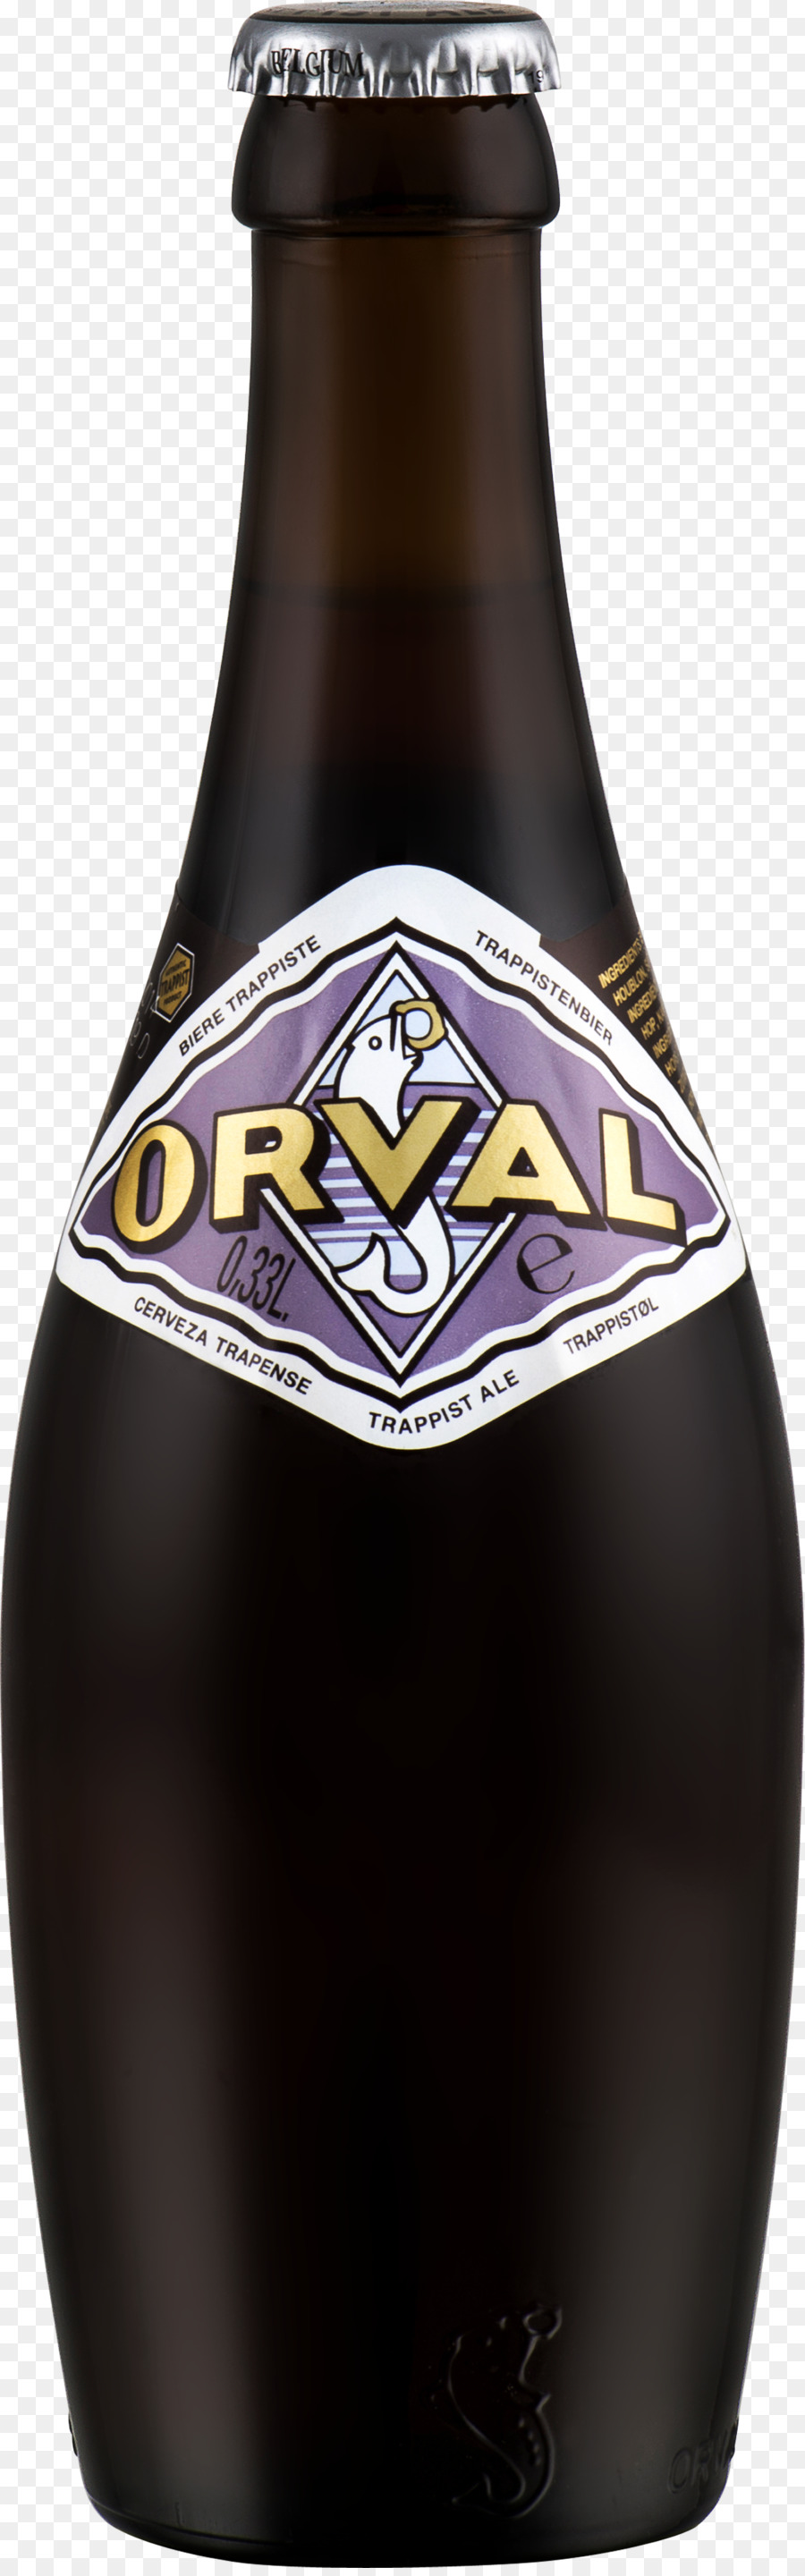 Orval Brauerei Trappistenbier Orval Abtei Likör - Bier